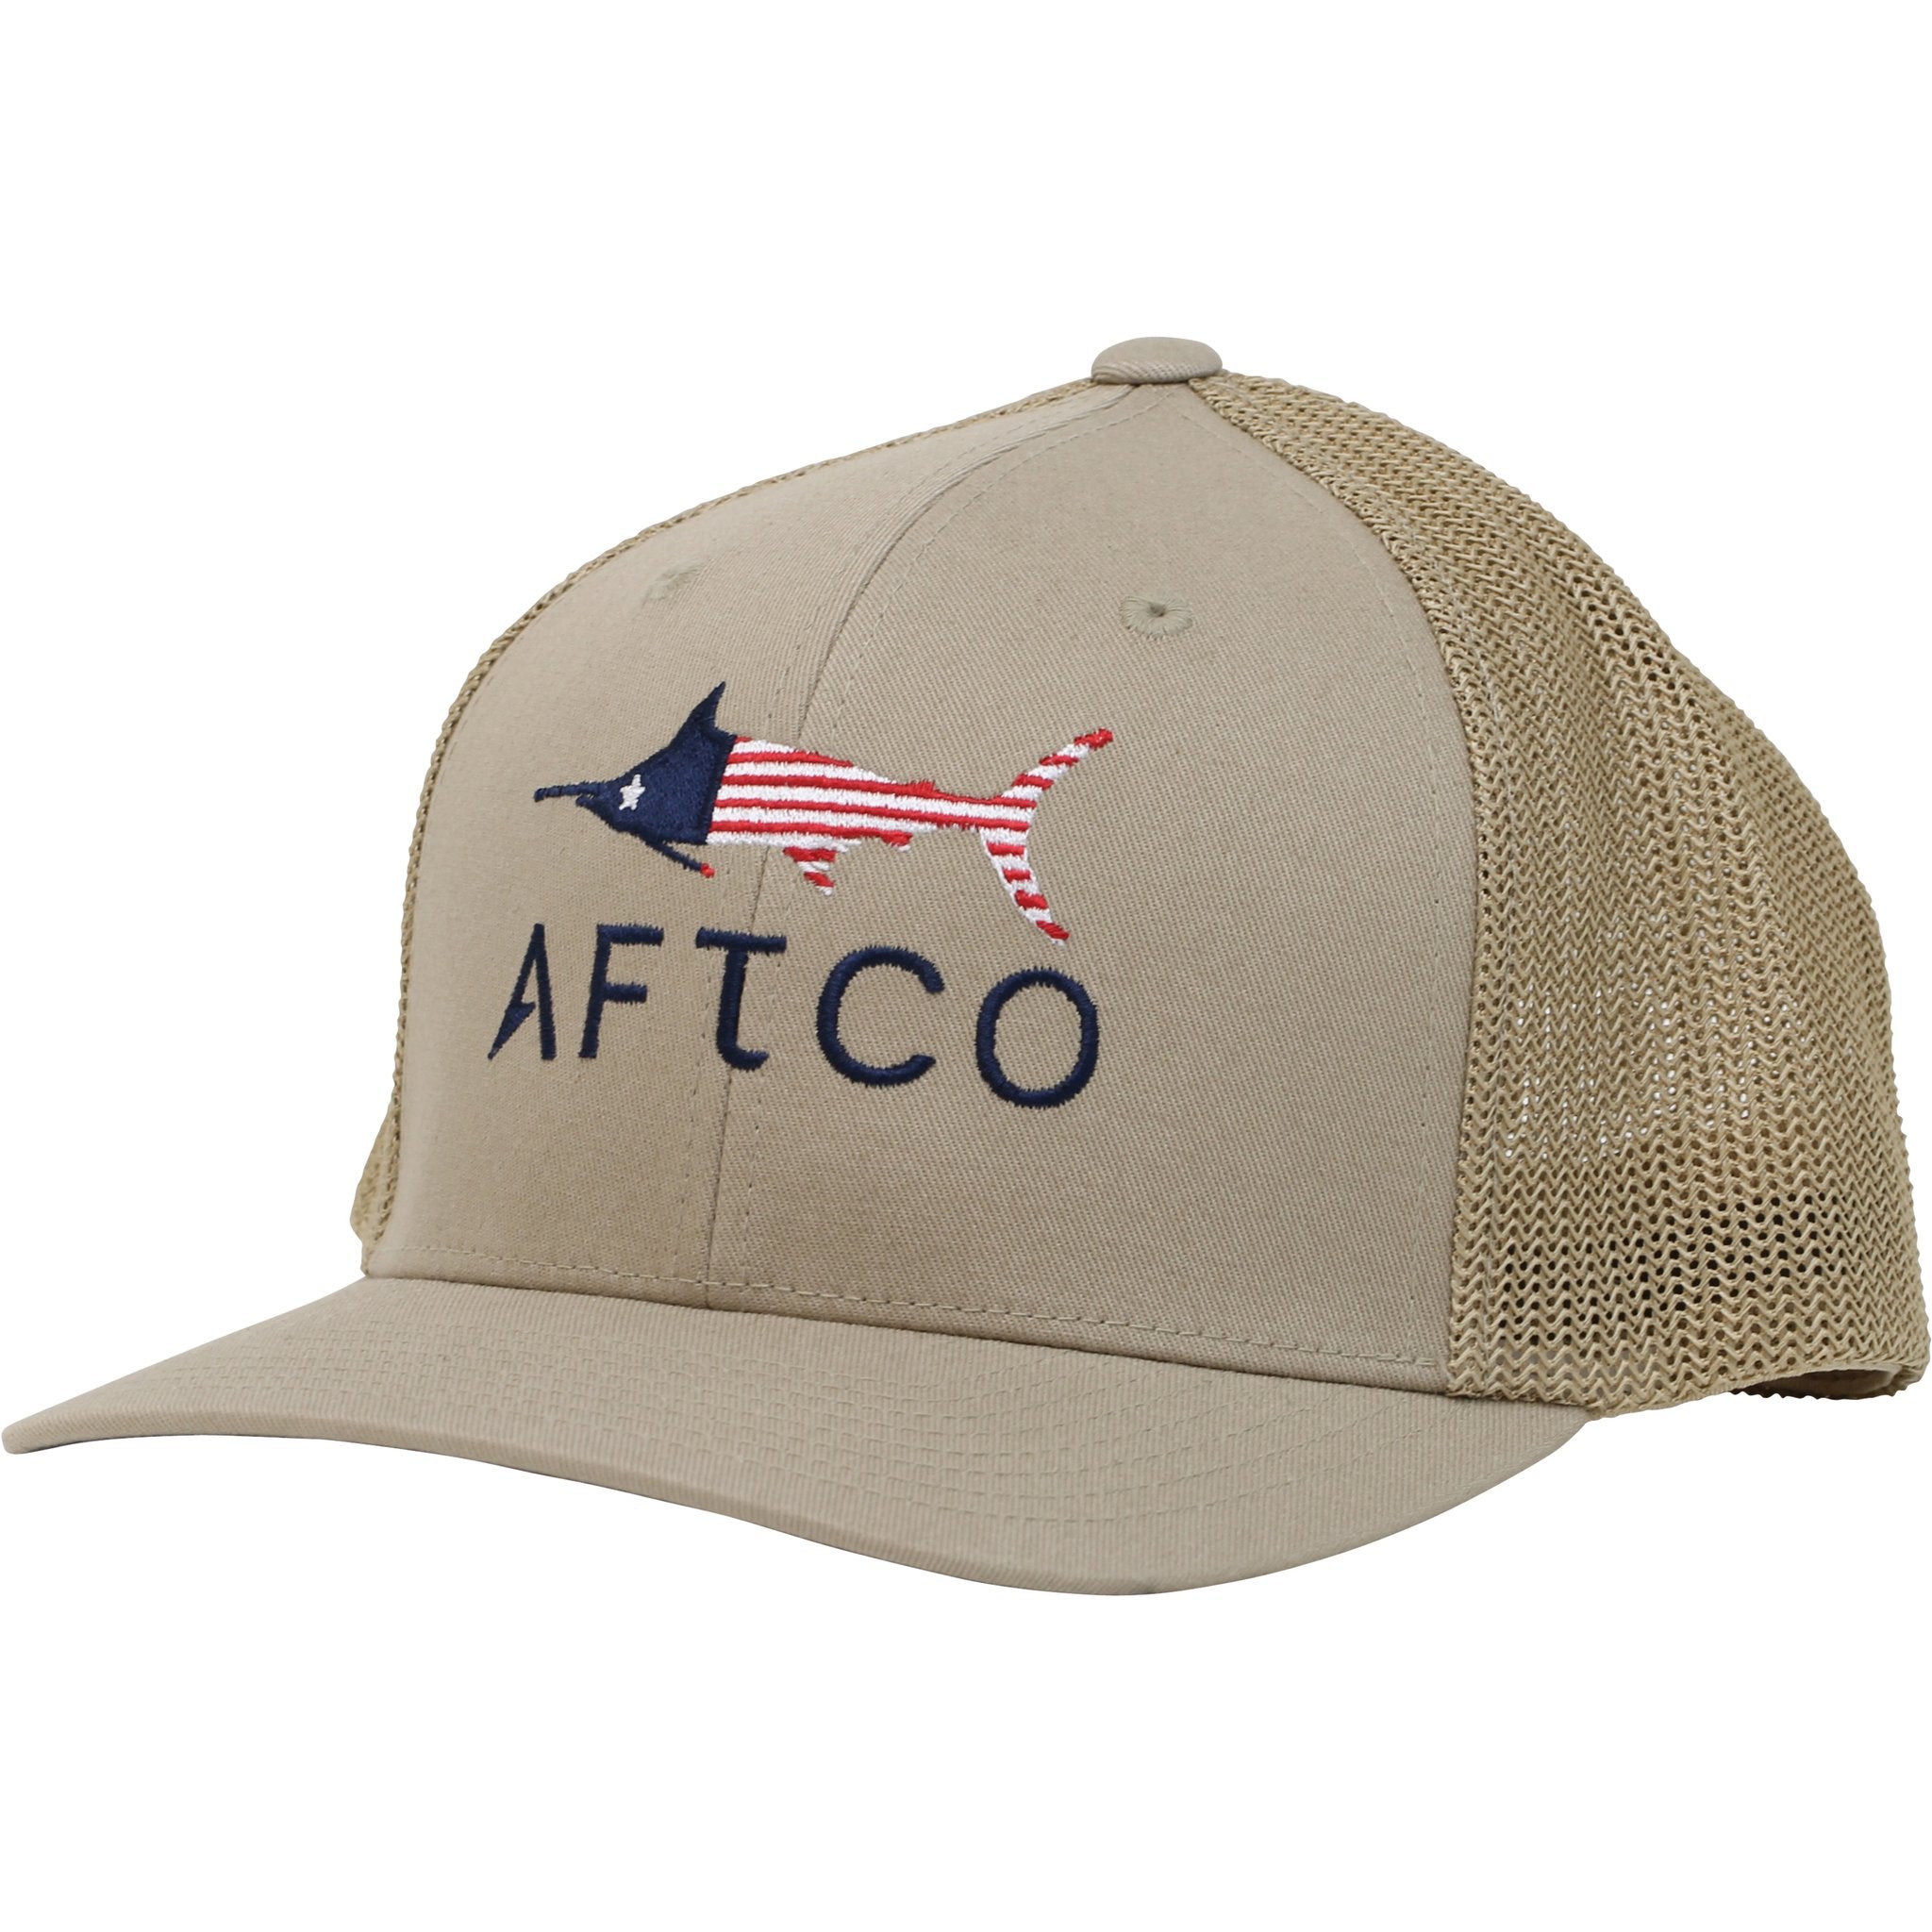 Aftco Meric Flexfit Hat Khaki L/XL